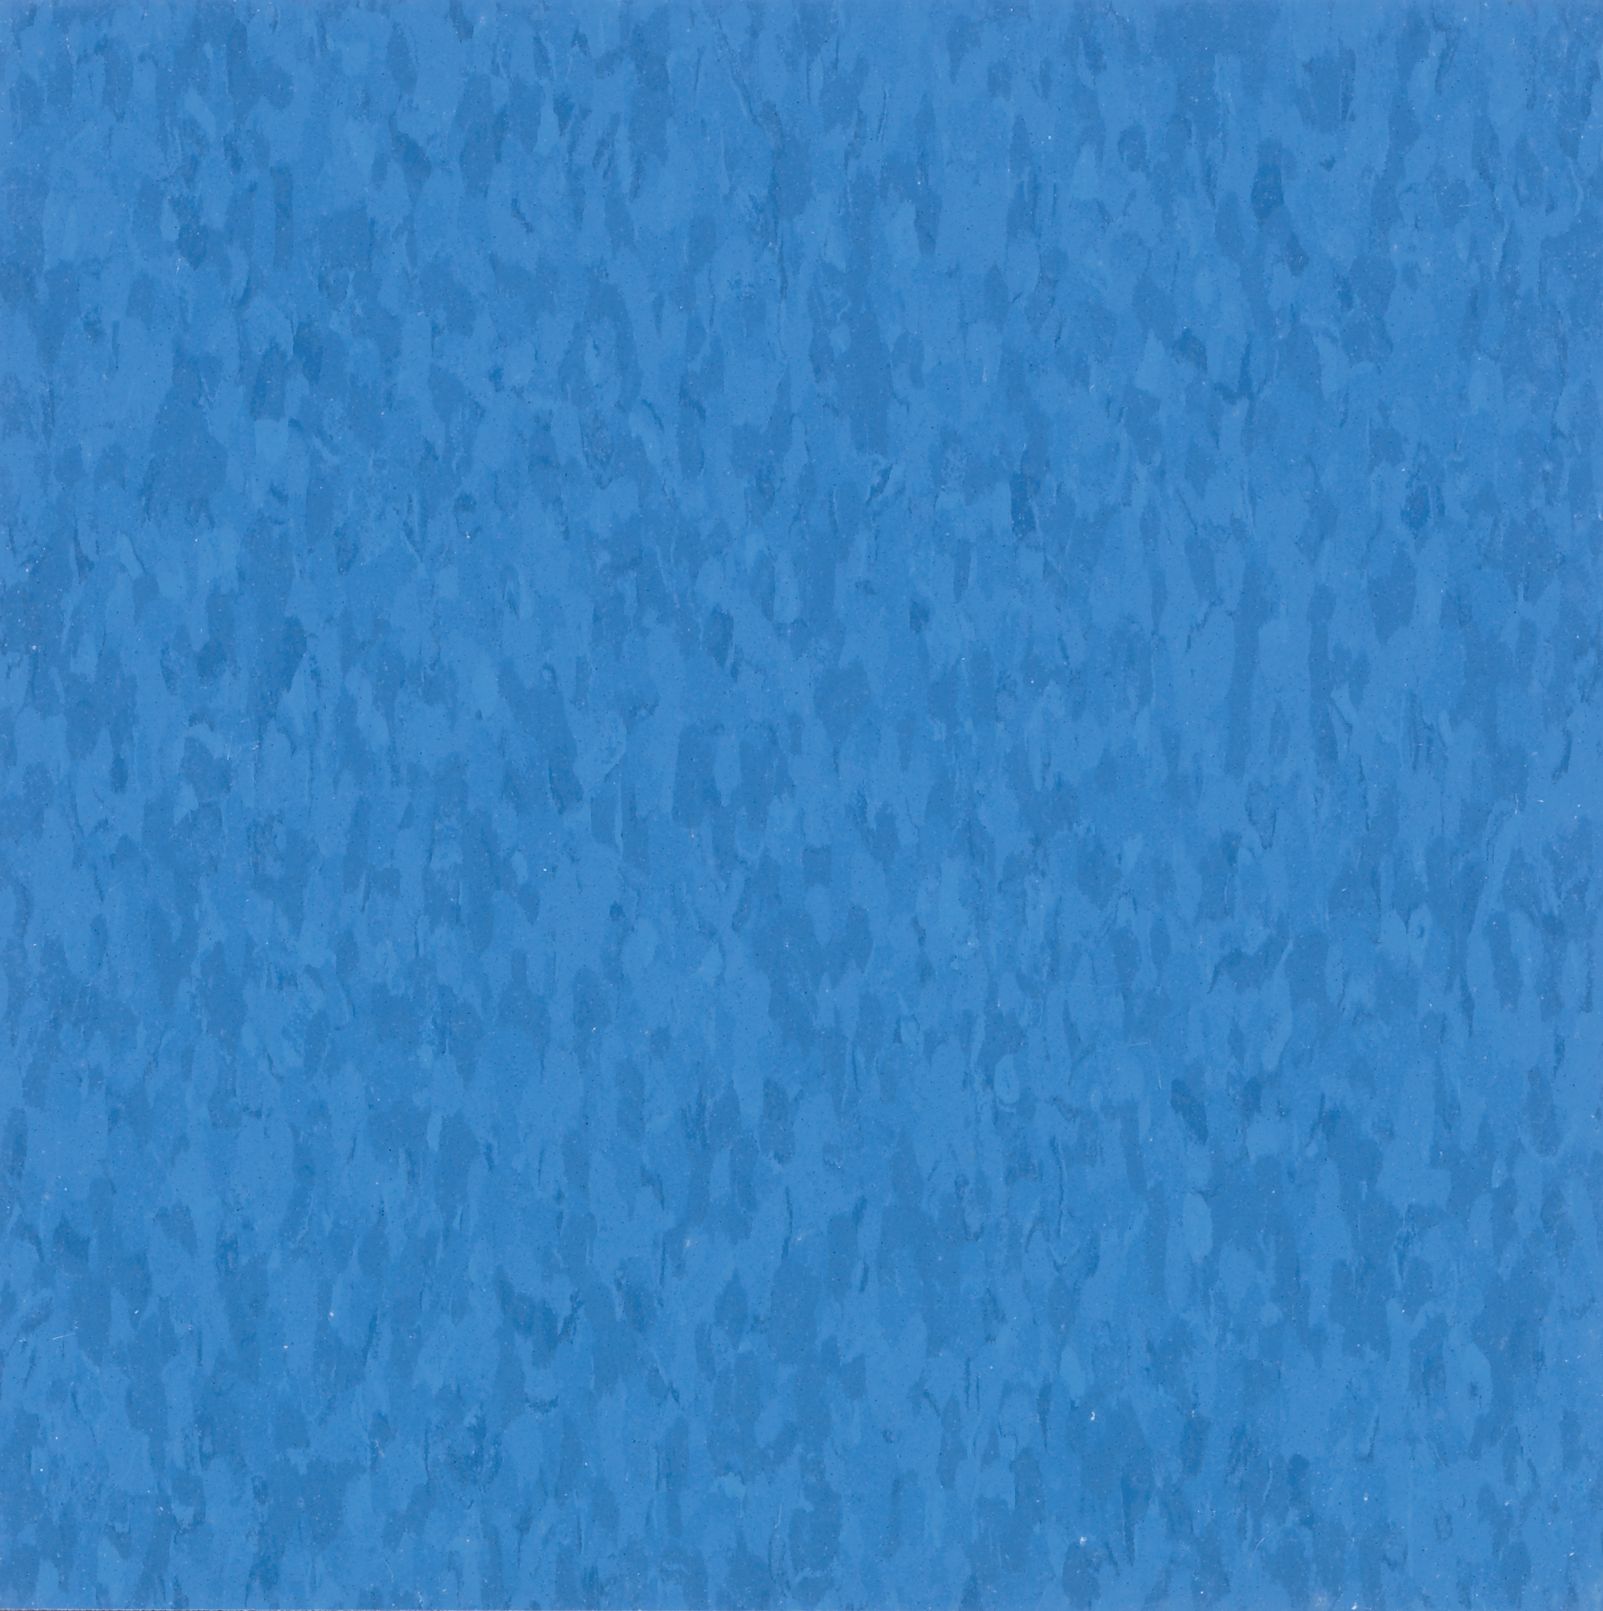 Standard Excelon Imperial Texture Bodacious Blue